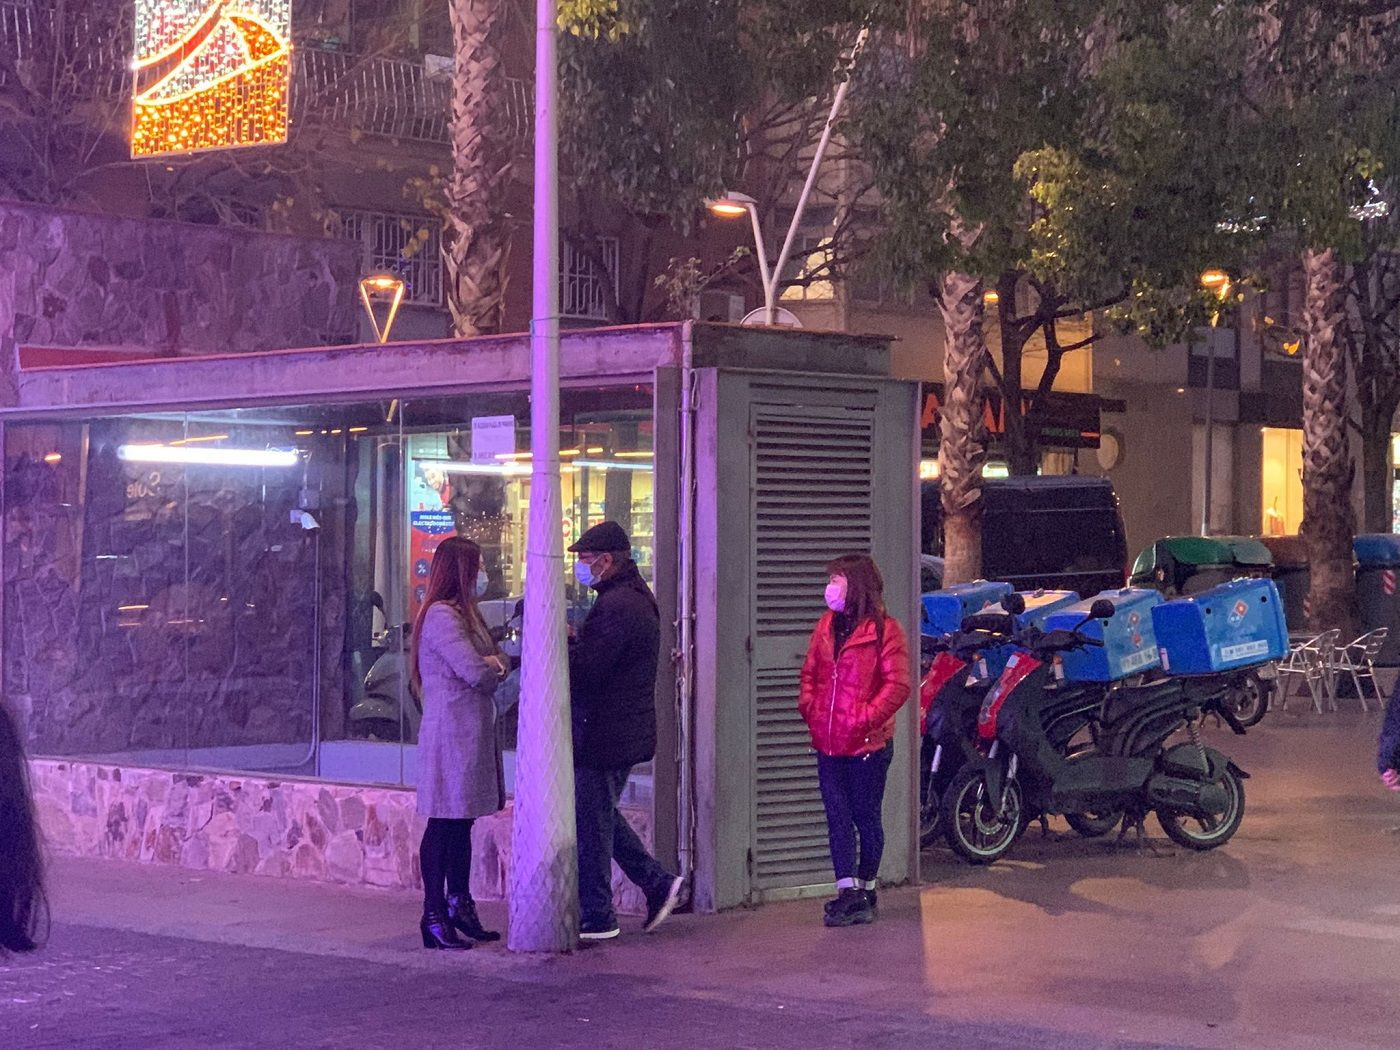 Dos prostitutas conversan con un hombre en la plaza del Rellotge de Fondo, en Santa Coloma / METRÓPOLI